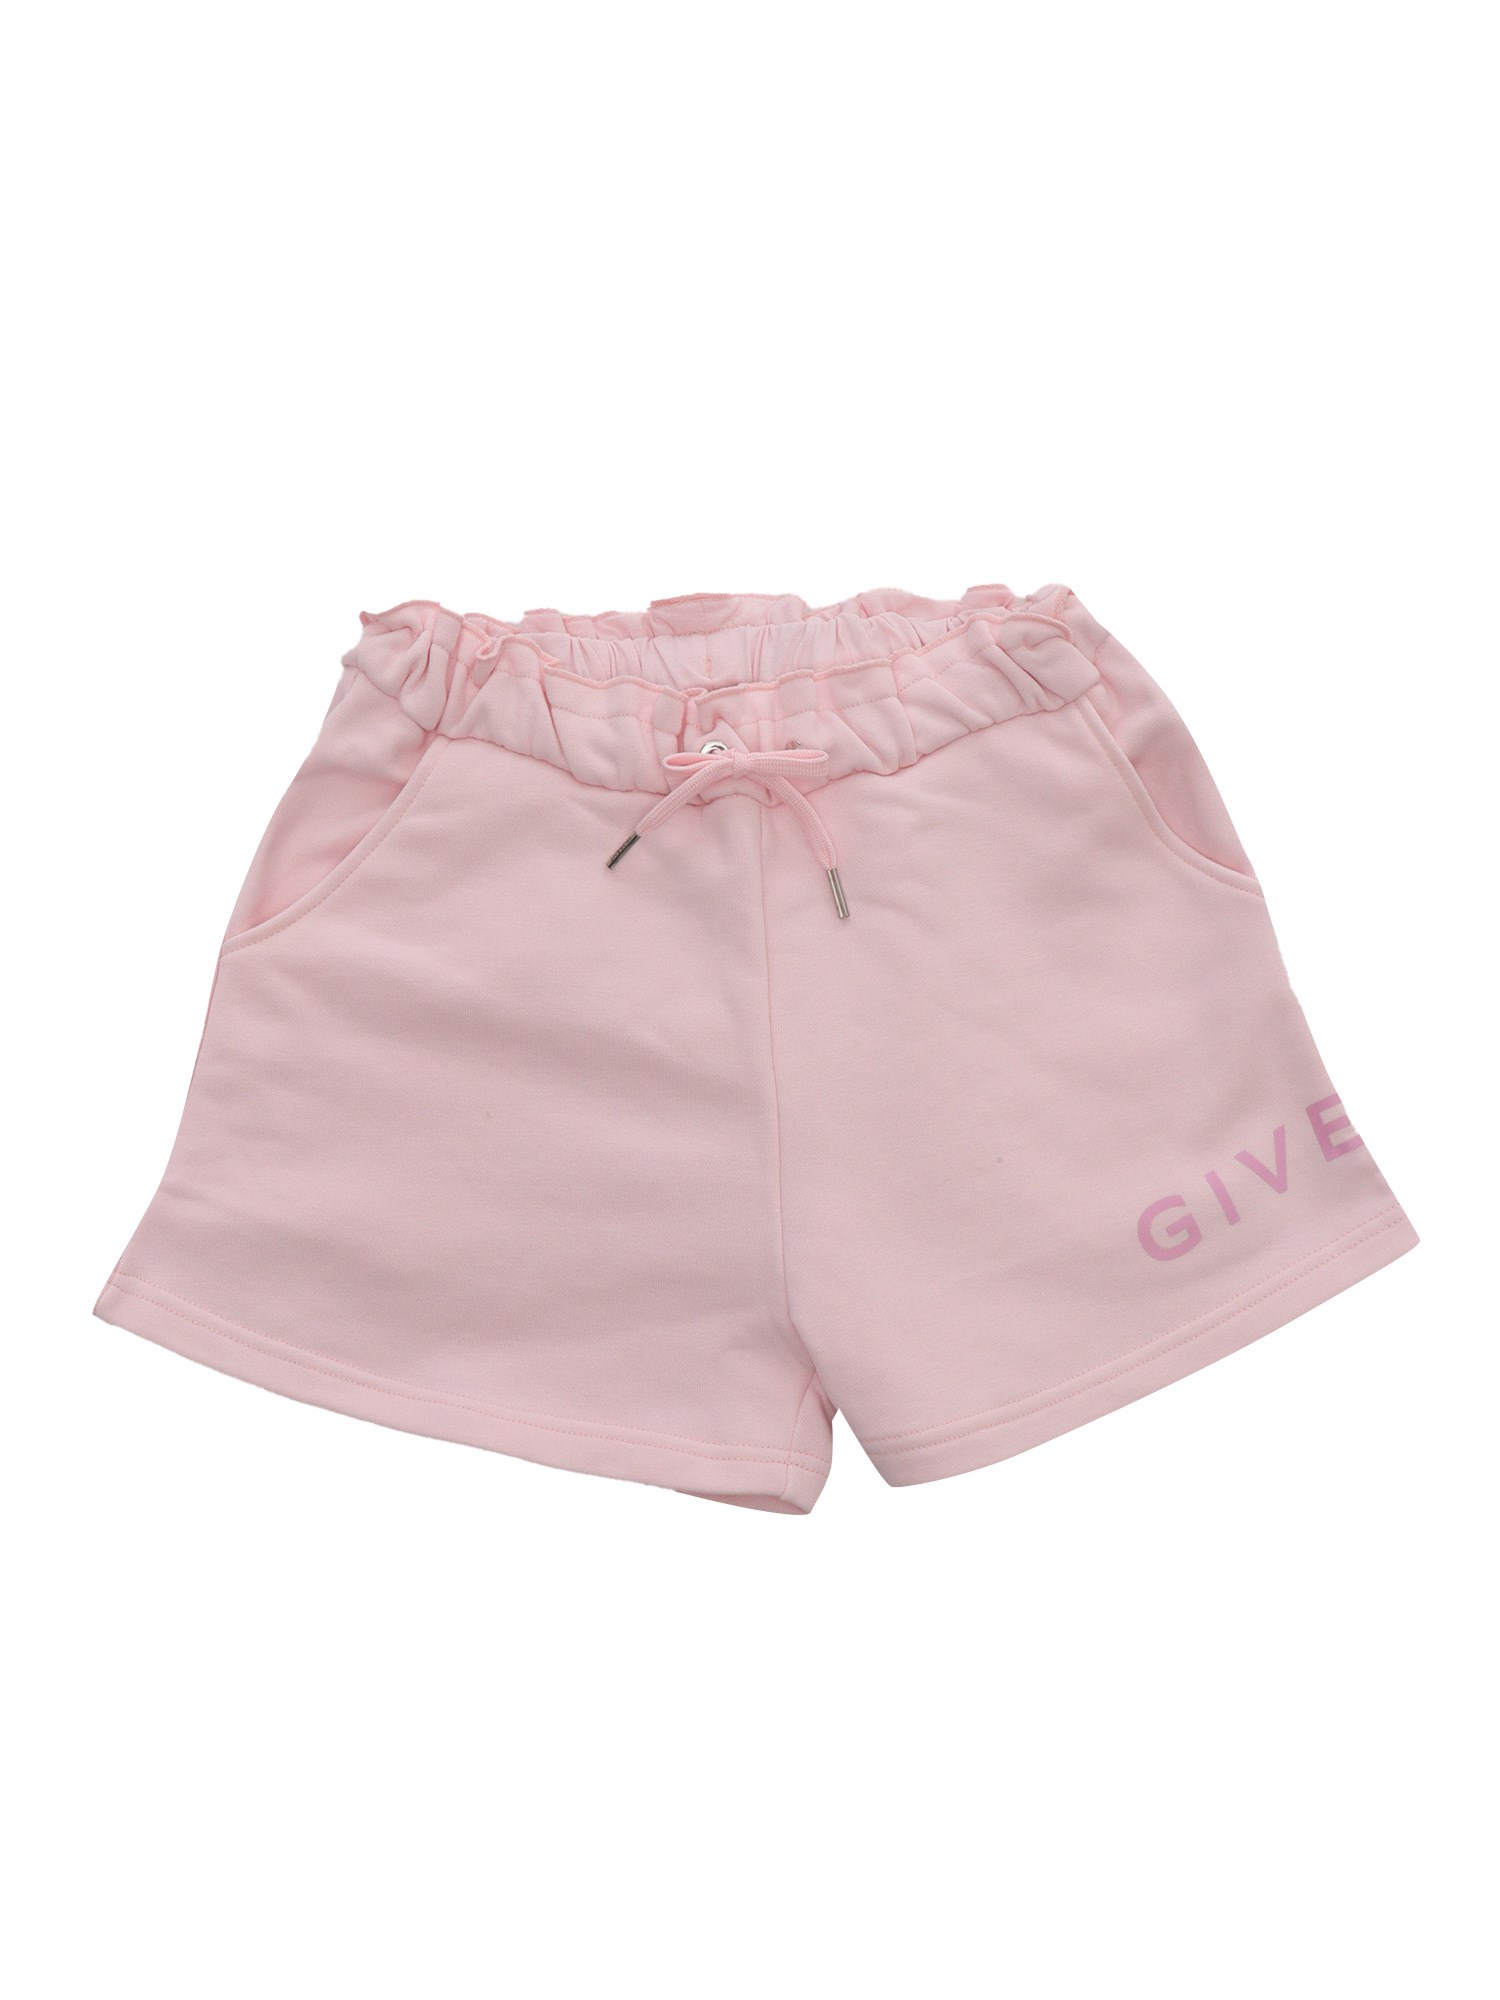 Givenchy Pink Shorts With Logo